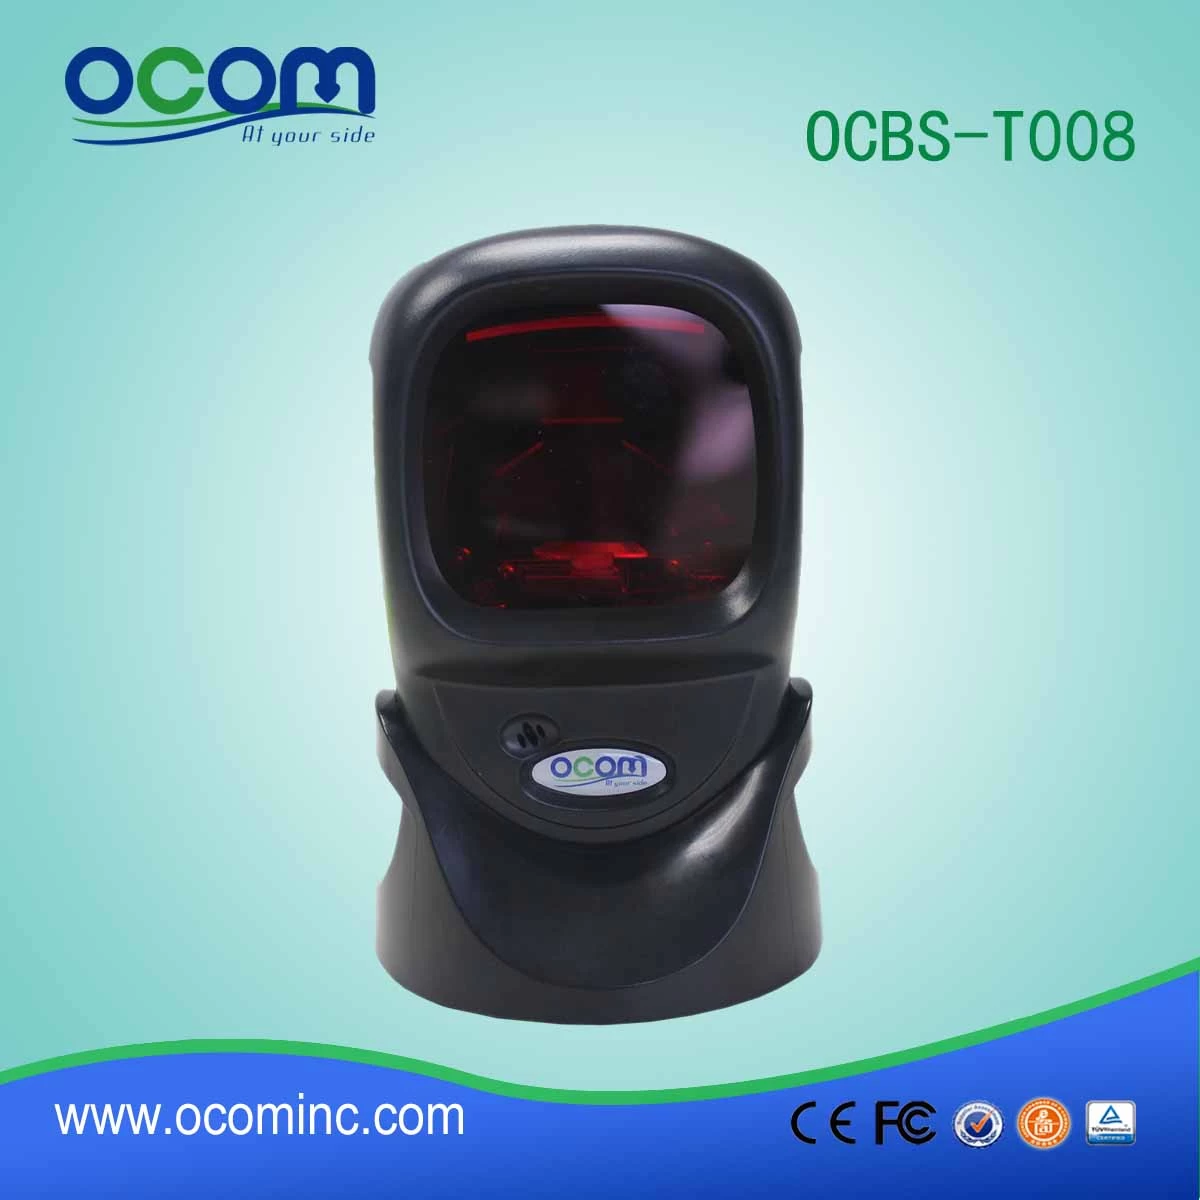 OCBS-T008 Supermarket Omini Cash Register Barcode POS Scanner